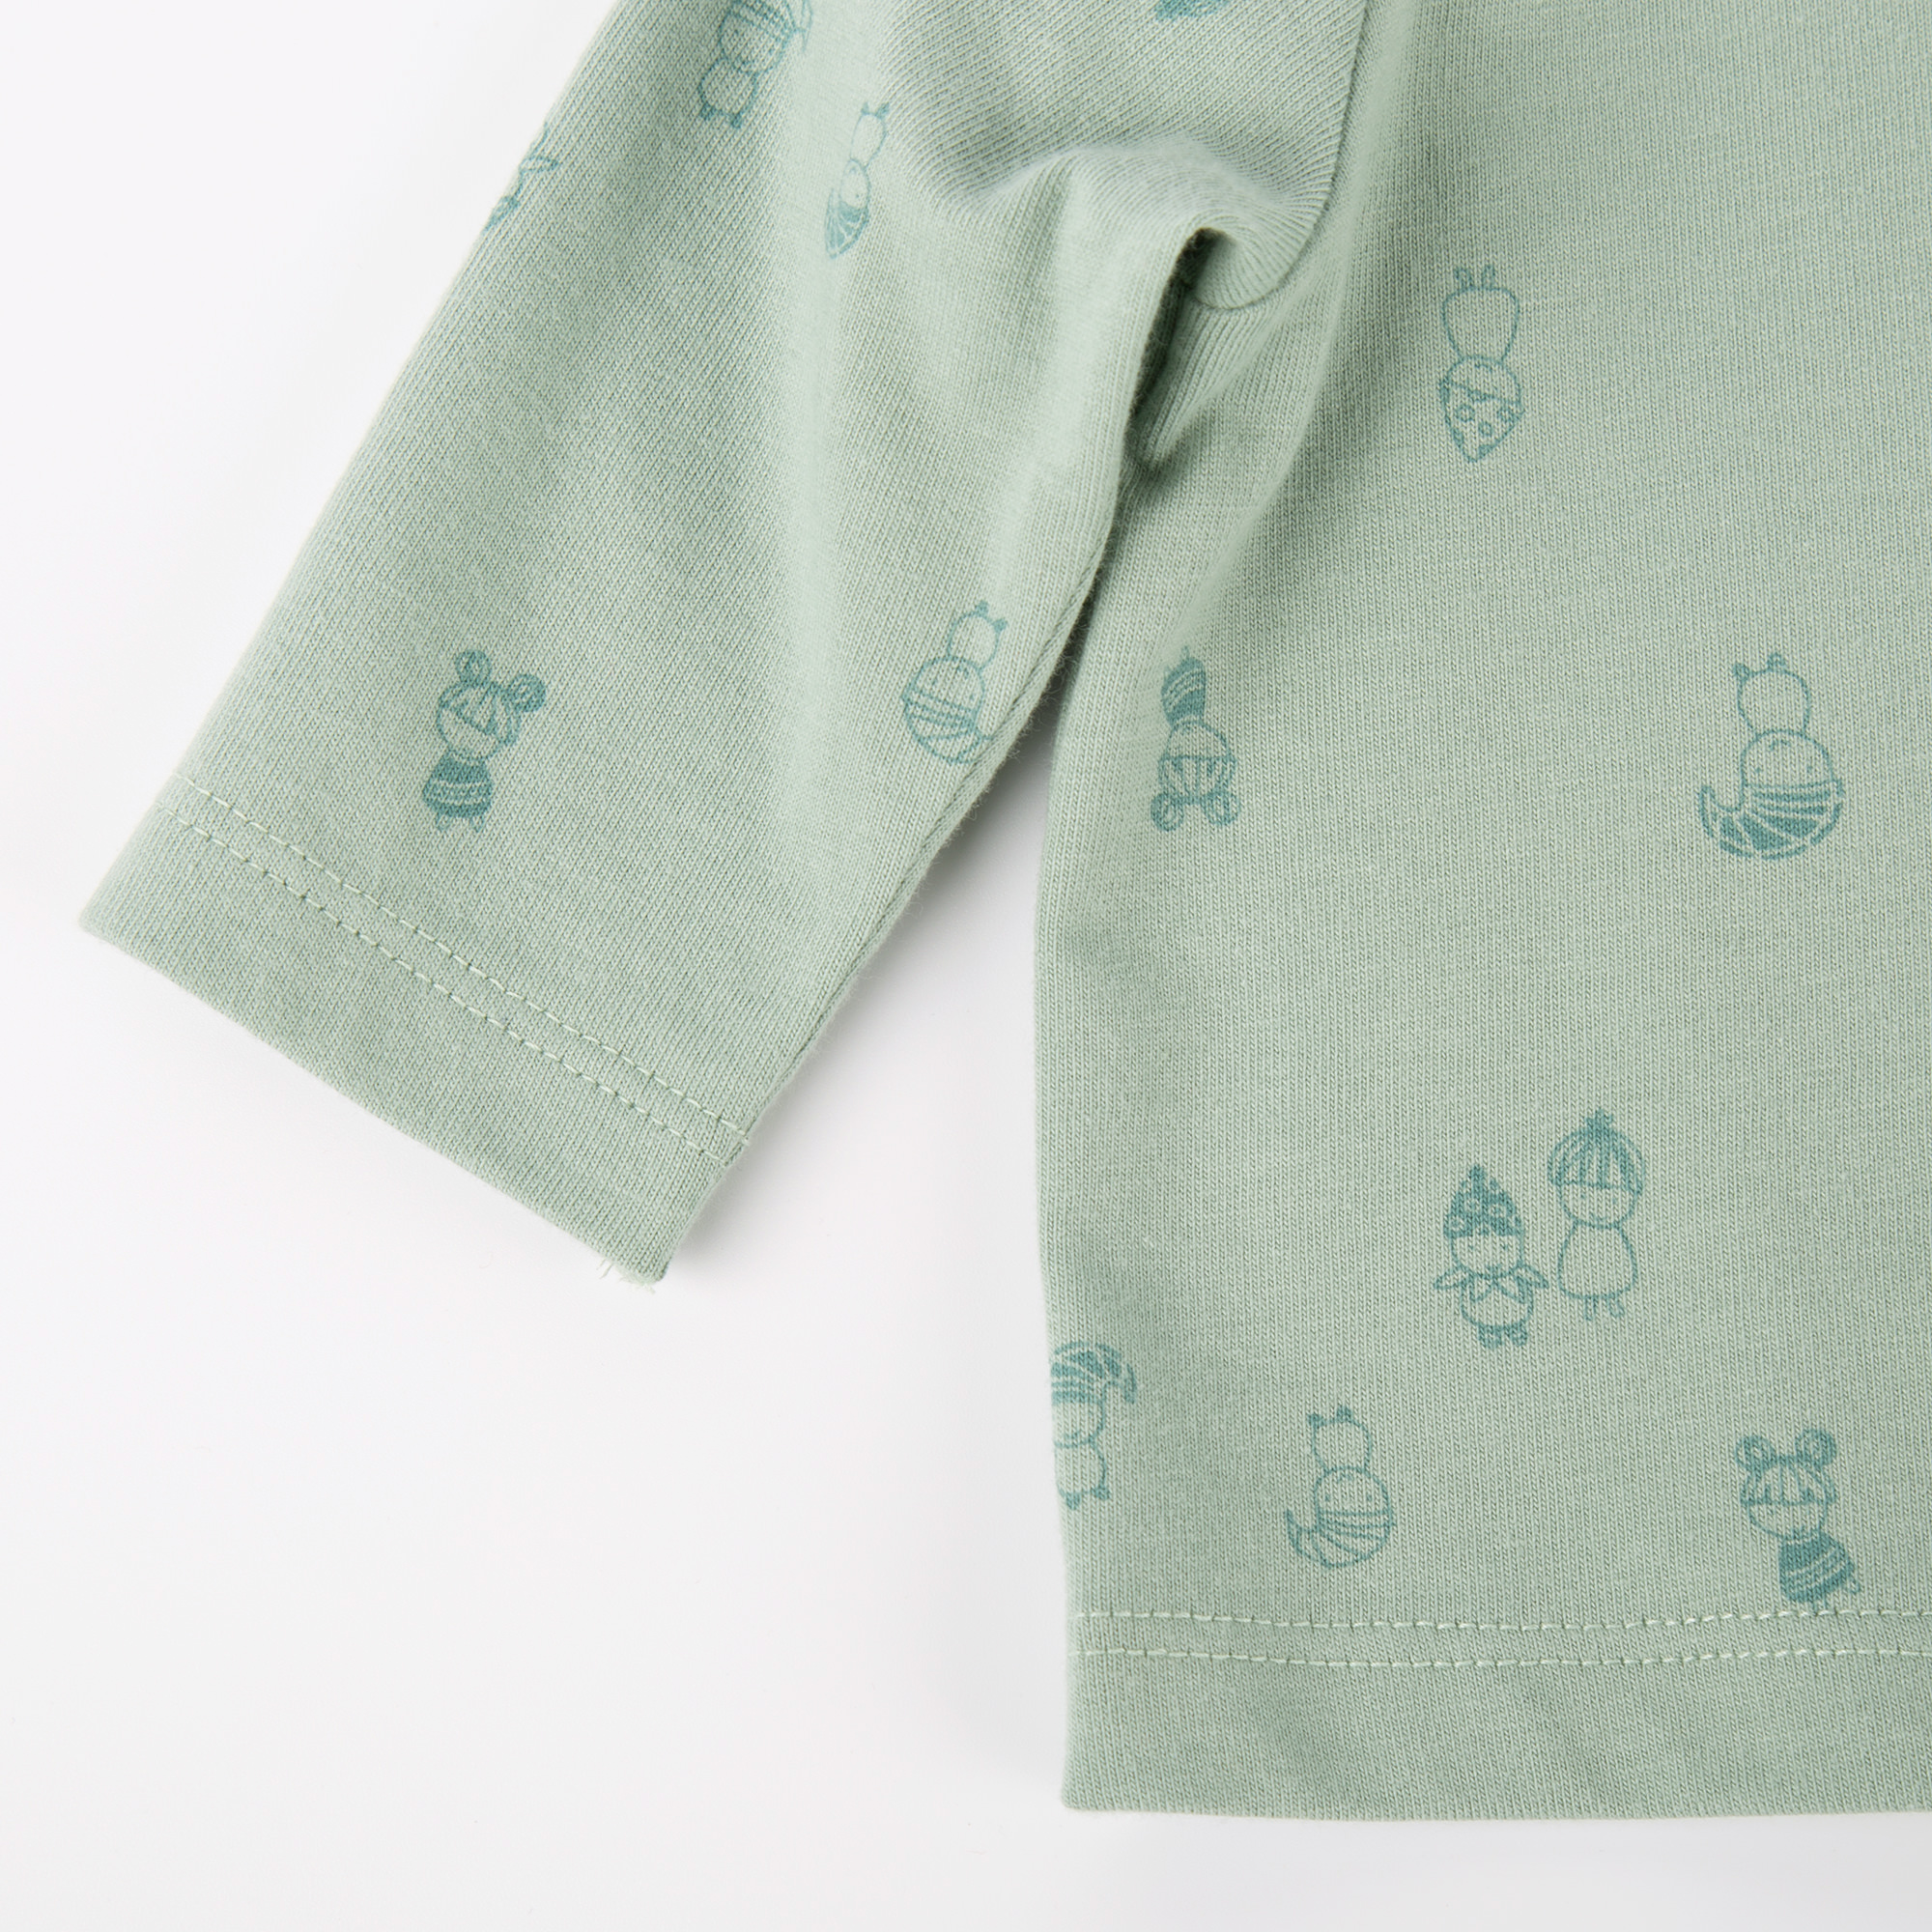 Newborn baby long sleeve Tee, mint green, print design